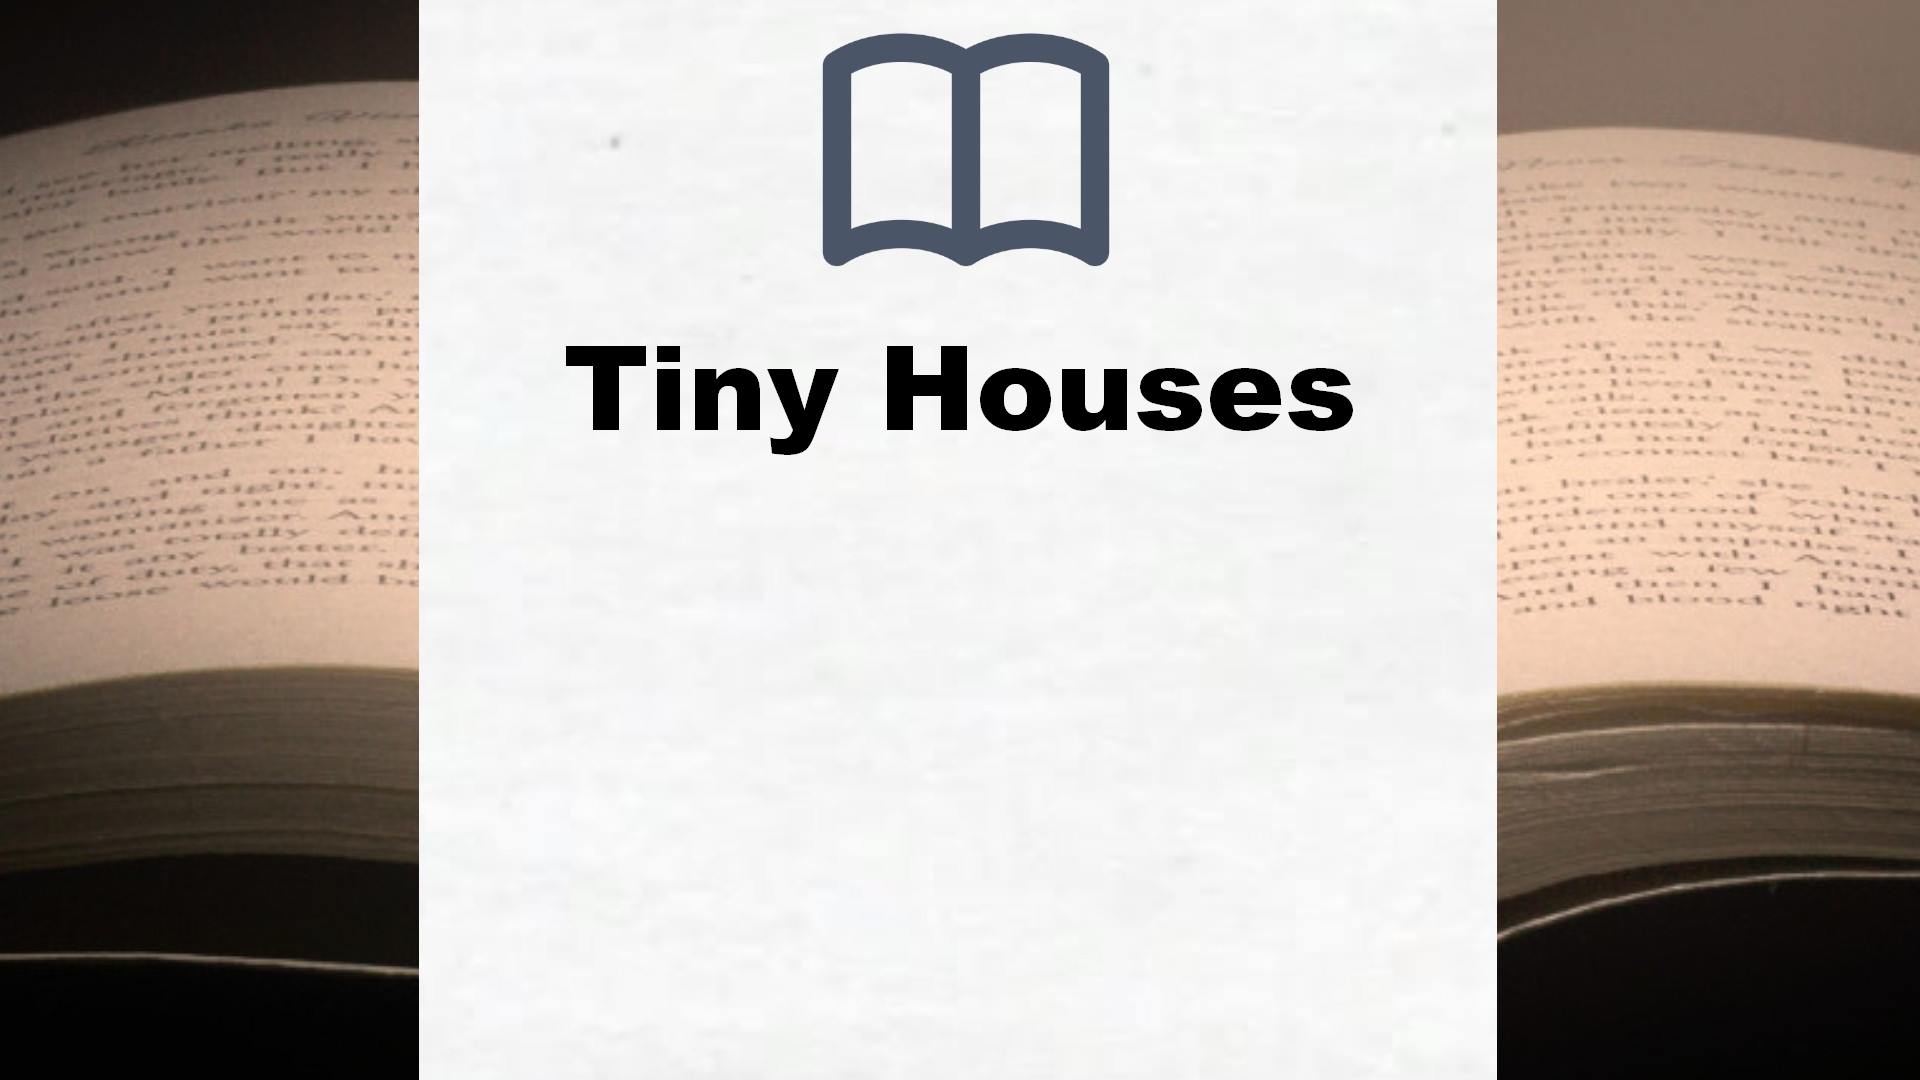 Bücher über Tiny Houses